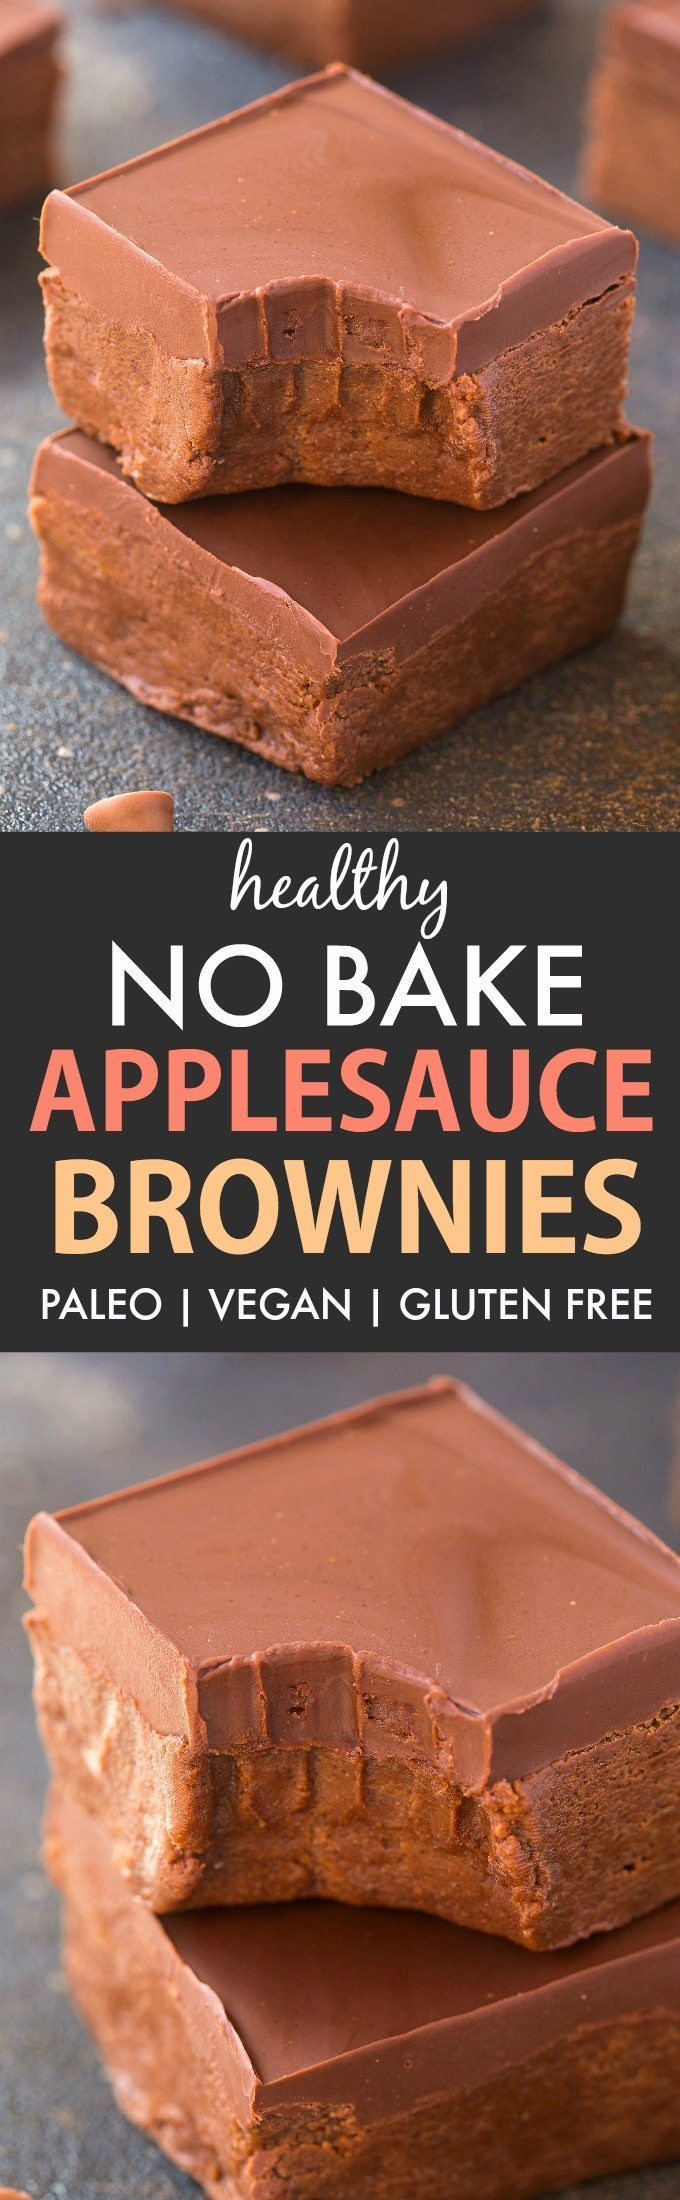 Healthy Applesauce Brownies
 Healthy No Bake Applesauce Brownies Paleo Vegan Gluten